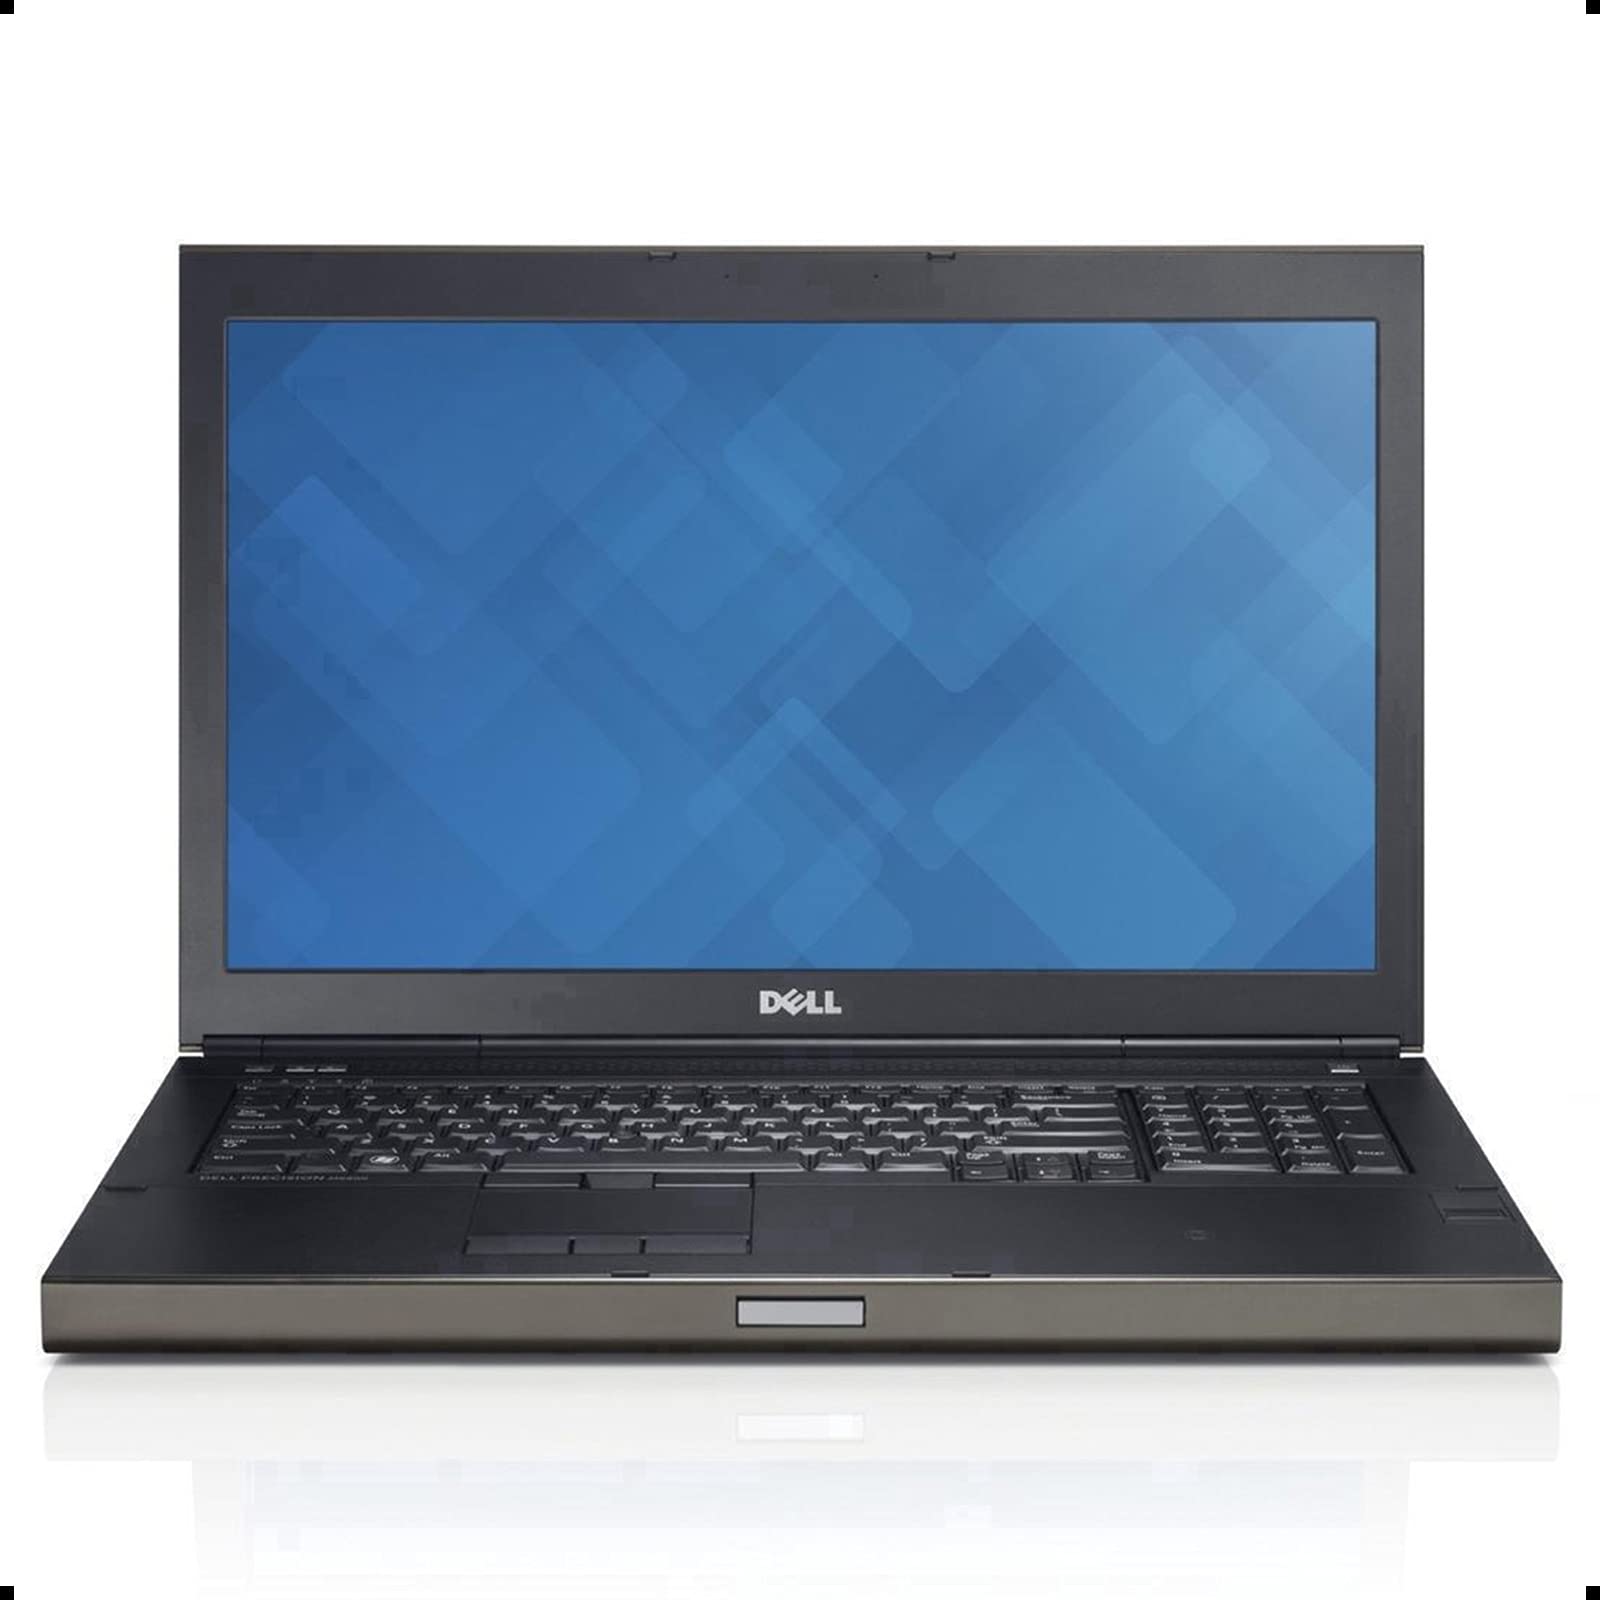 Mua Dell Precision M4800  FHD Ultrapowerful Mobile Workstation Laptop  PC, Intel Core i7-4810MQ, 32GB RAM, 1TB Hard Drive, NVIDIA Quadro K2100M,  Windows 10 Pro (Renewed) trên Amazon Mỹ chính hãng 2023 | Fado